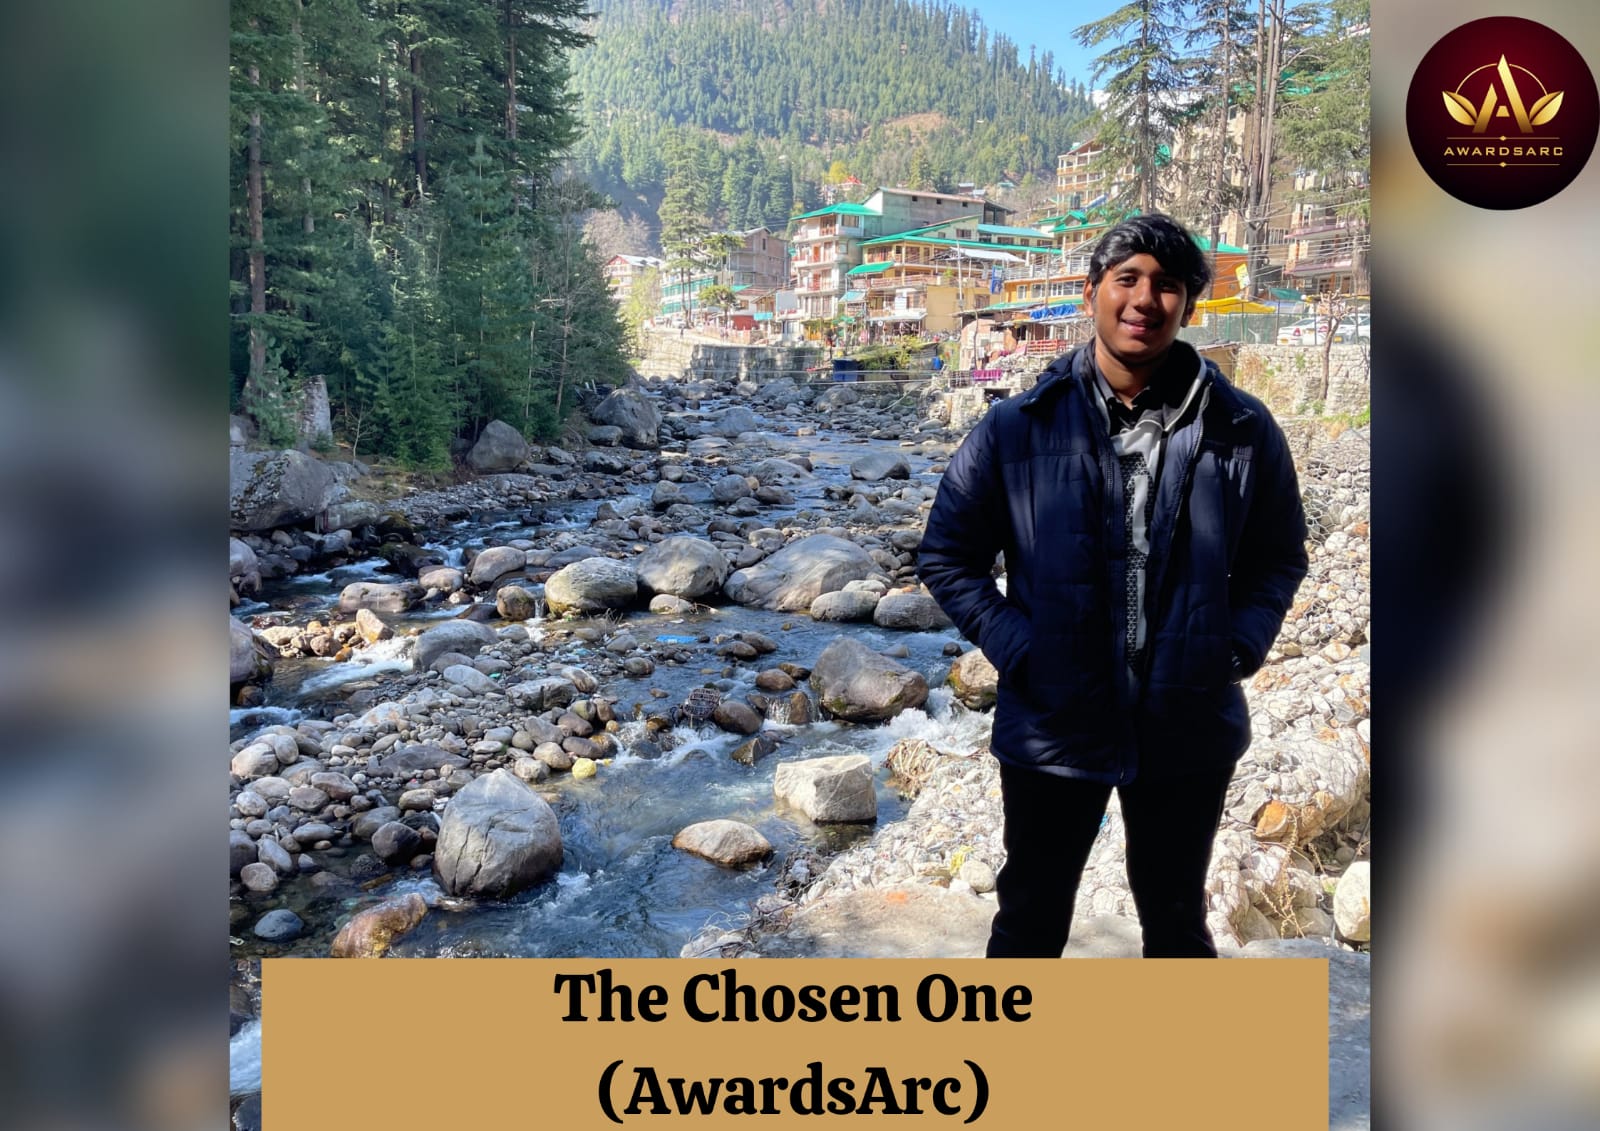 Chirag L Sagar’s inspiring journey led him to be THE CHOSEN ONE By AwardsArc